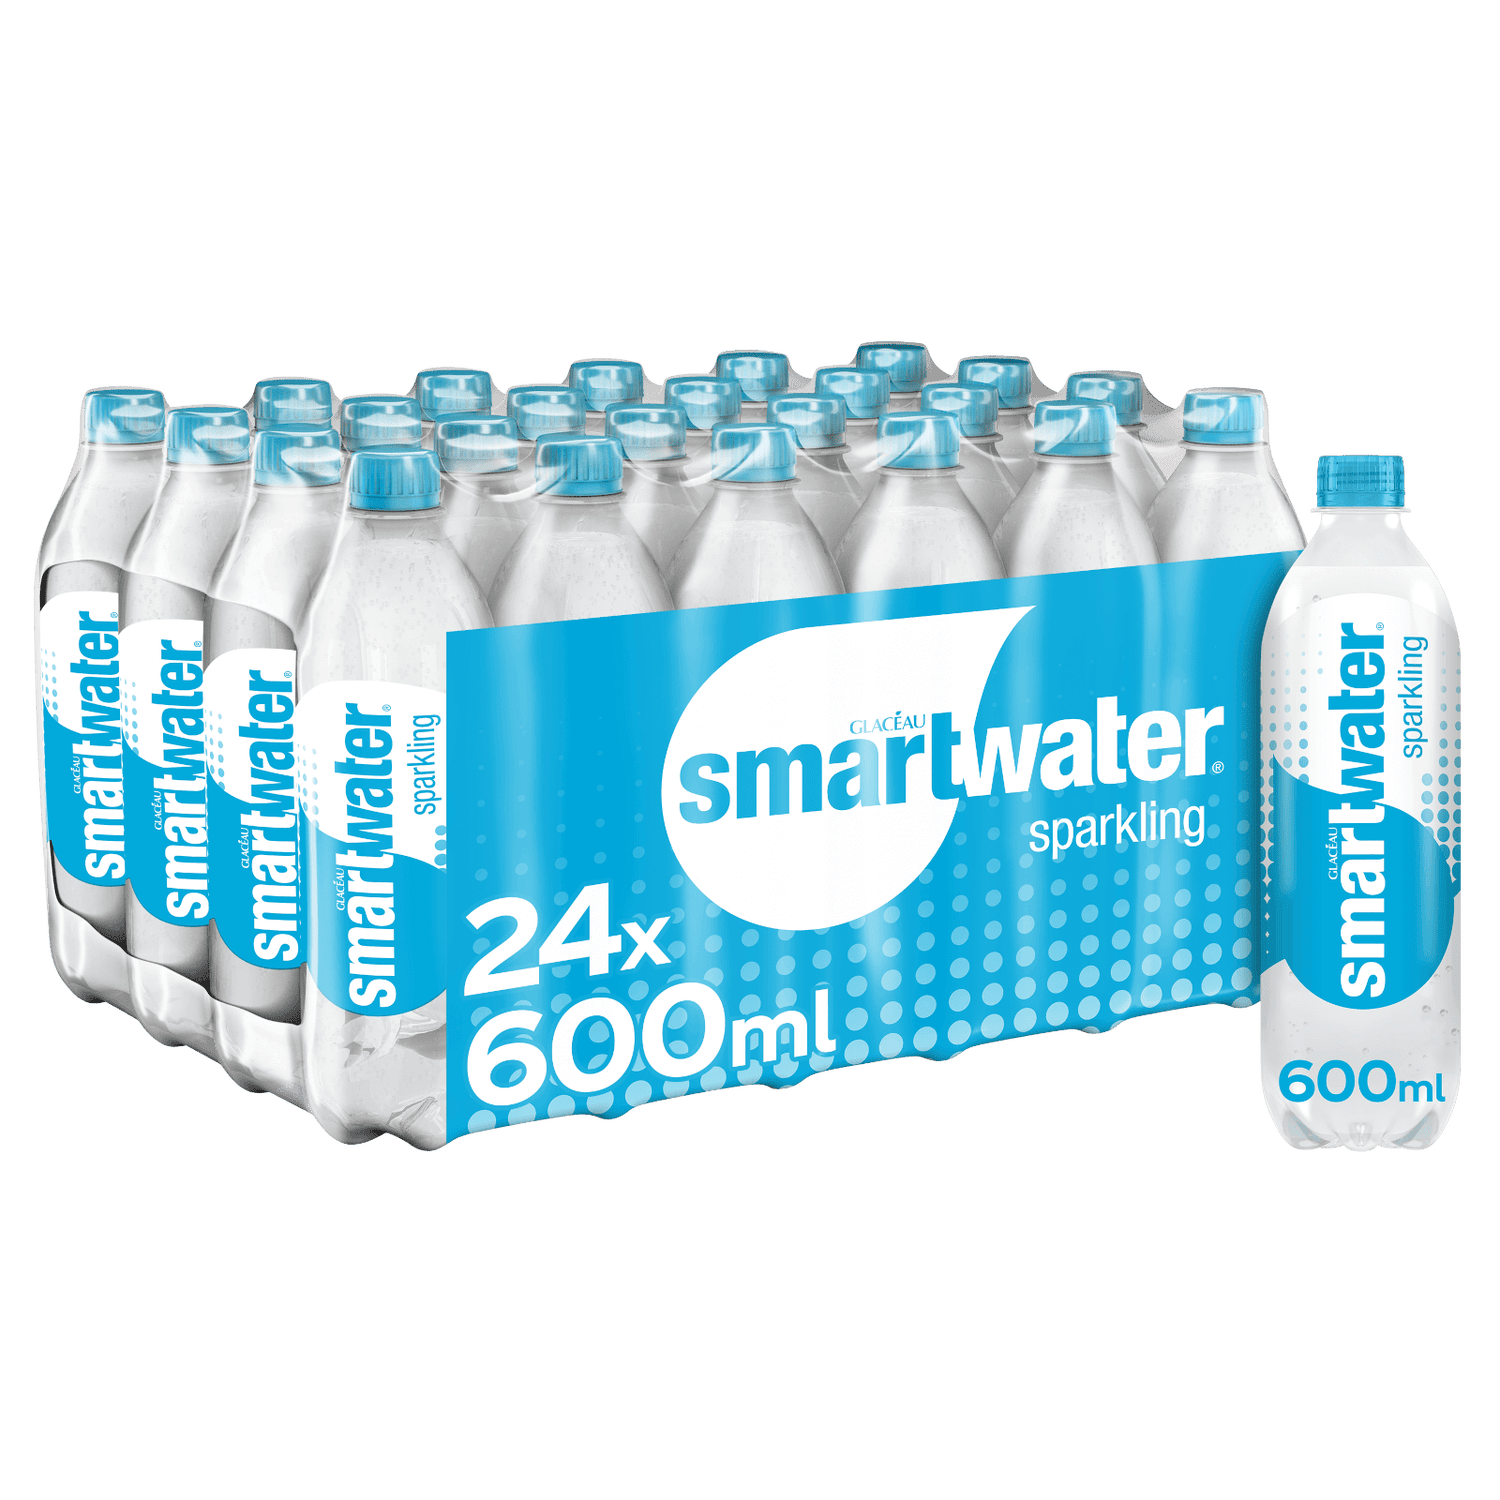 Glacéau Smartwater Sparkling 24 x 600ml Your Coca Cola UK